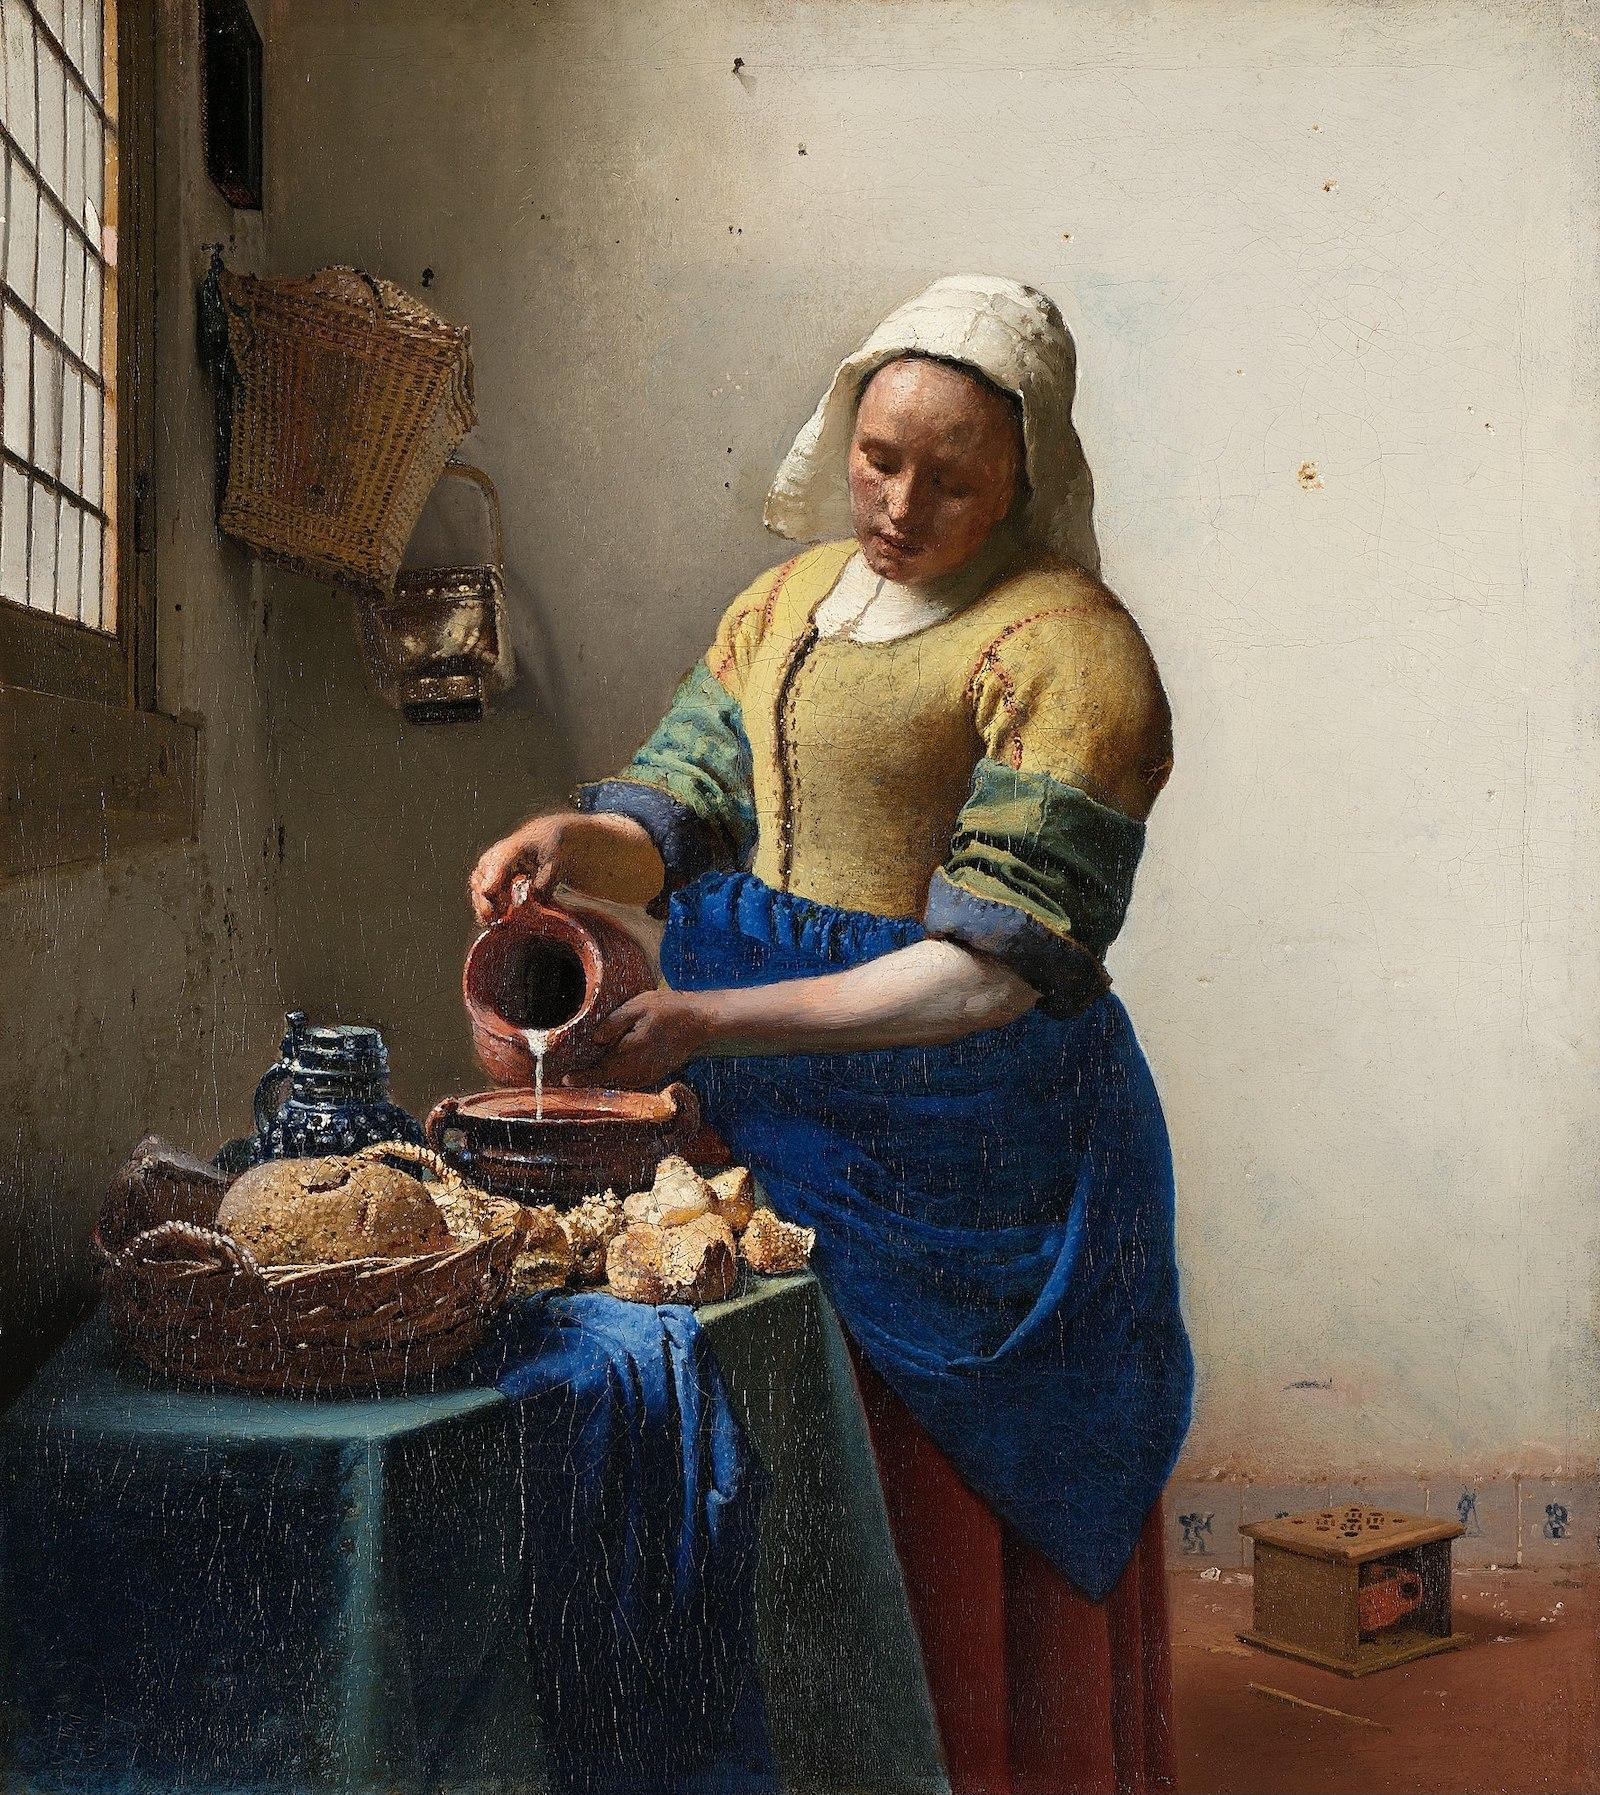 Johannes Vermeer, The Milkmaid, c. 1660. Rijksmuseum.